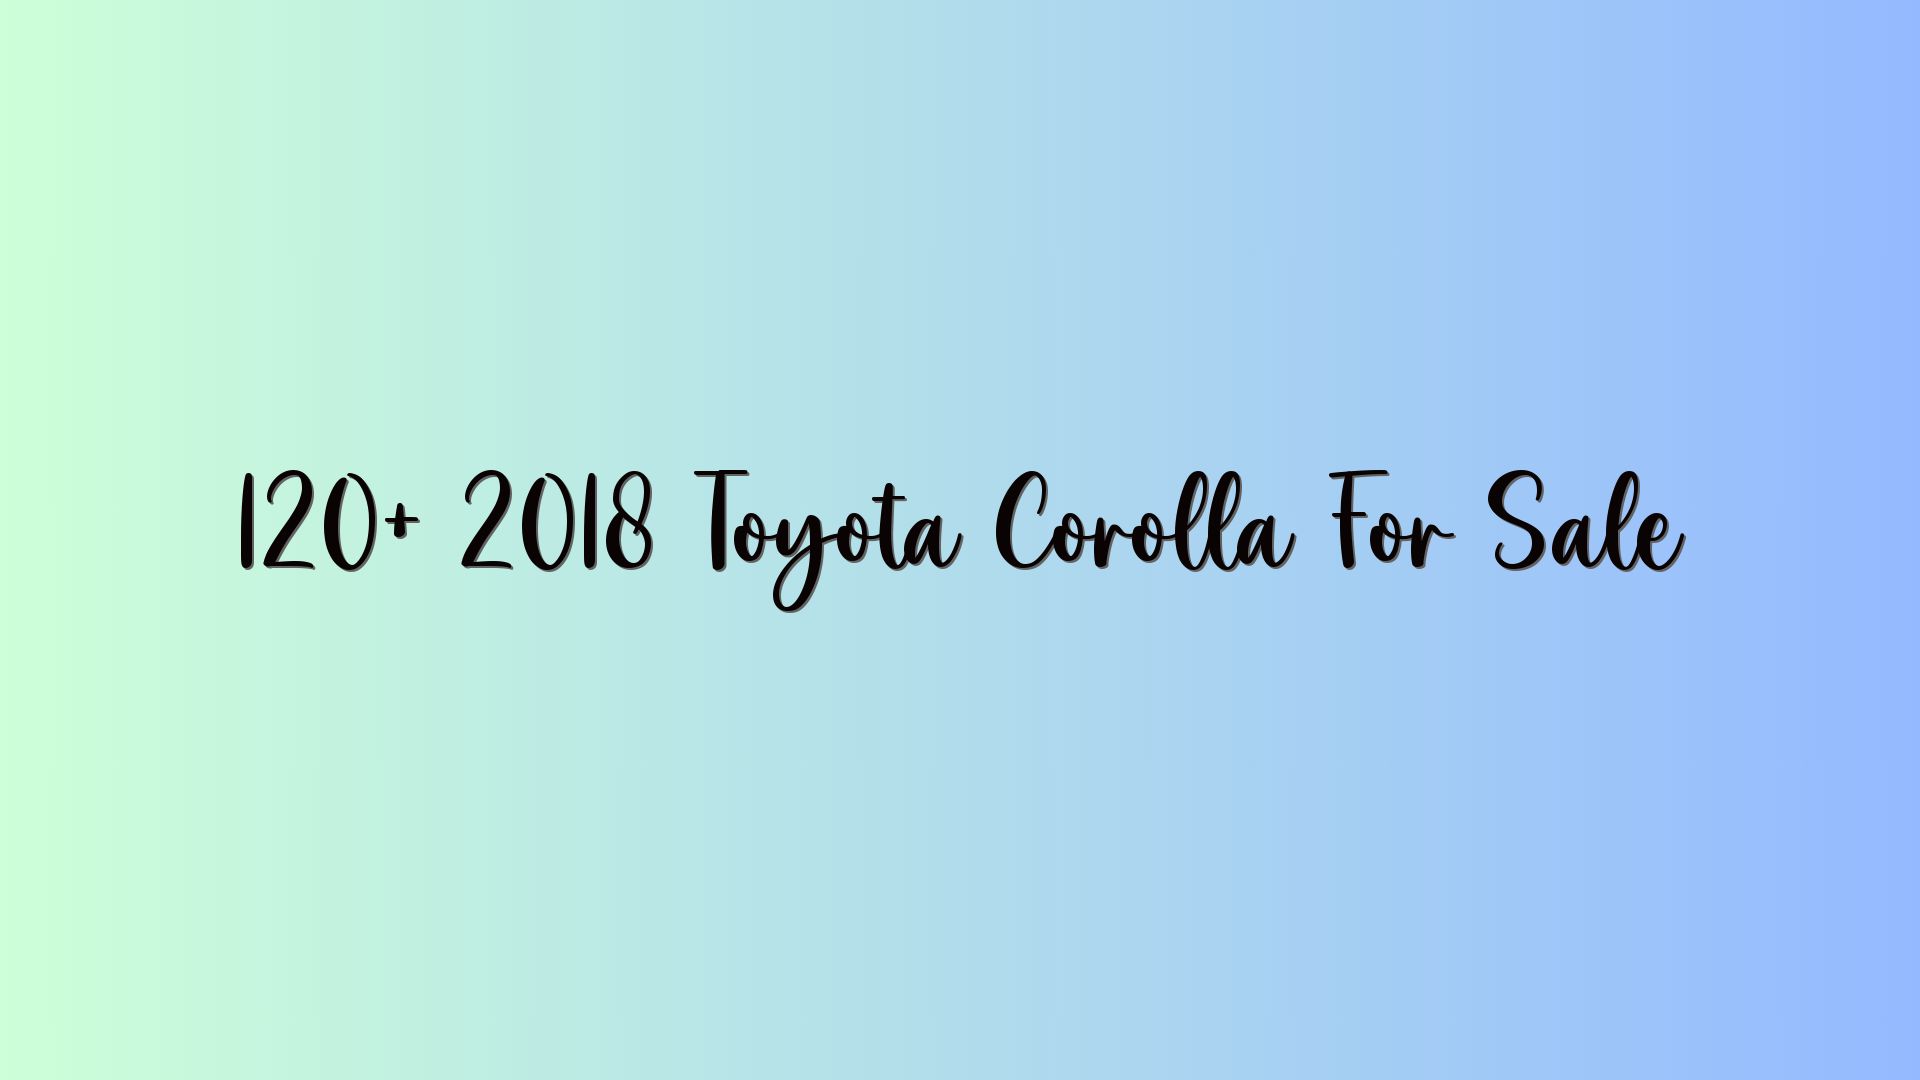 120+ 2018 Toyota Corolla For Sale